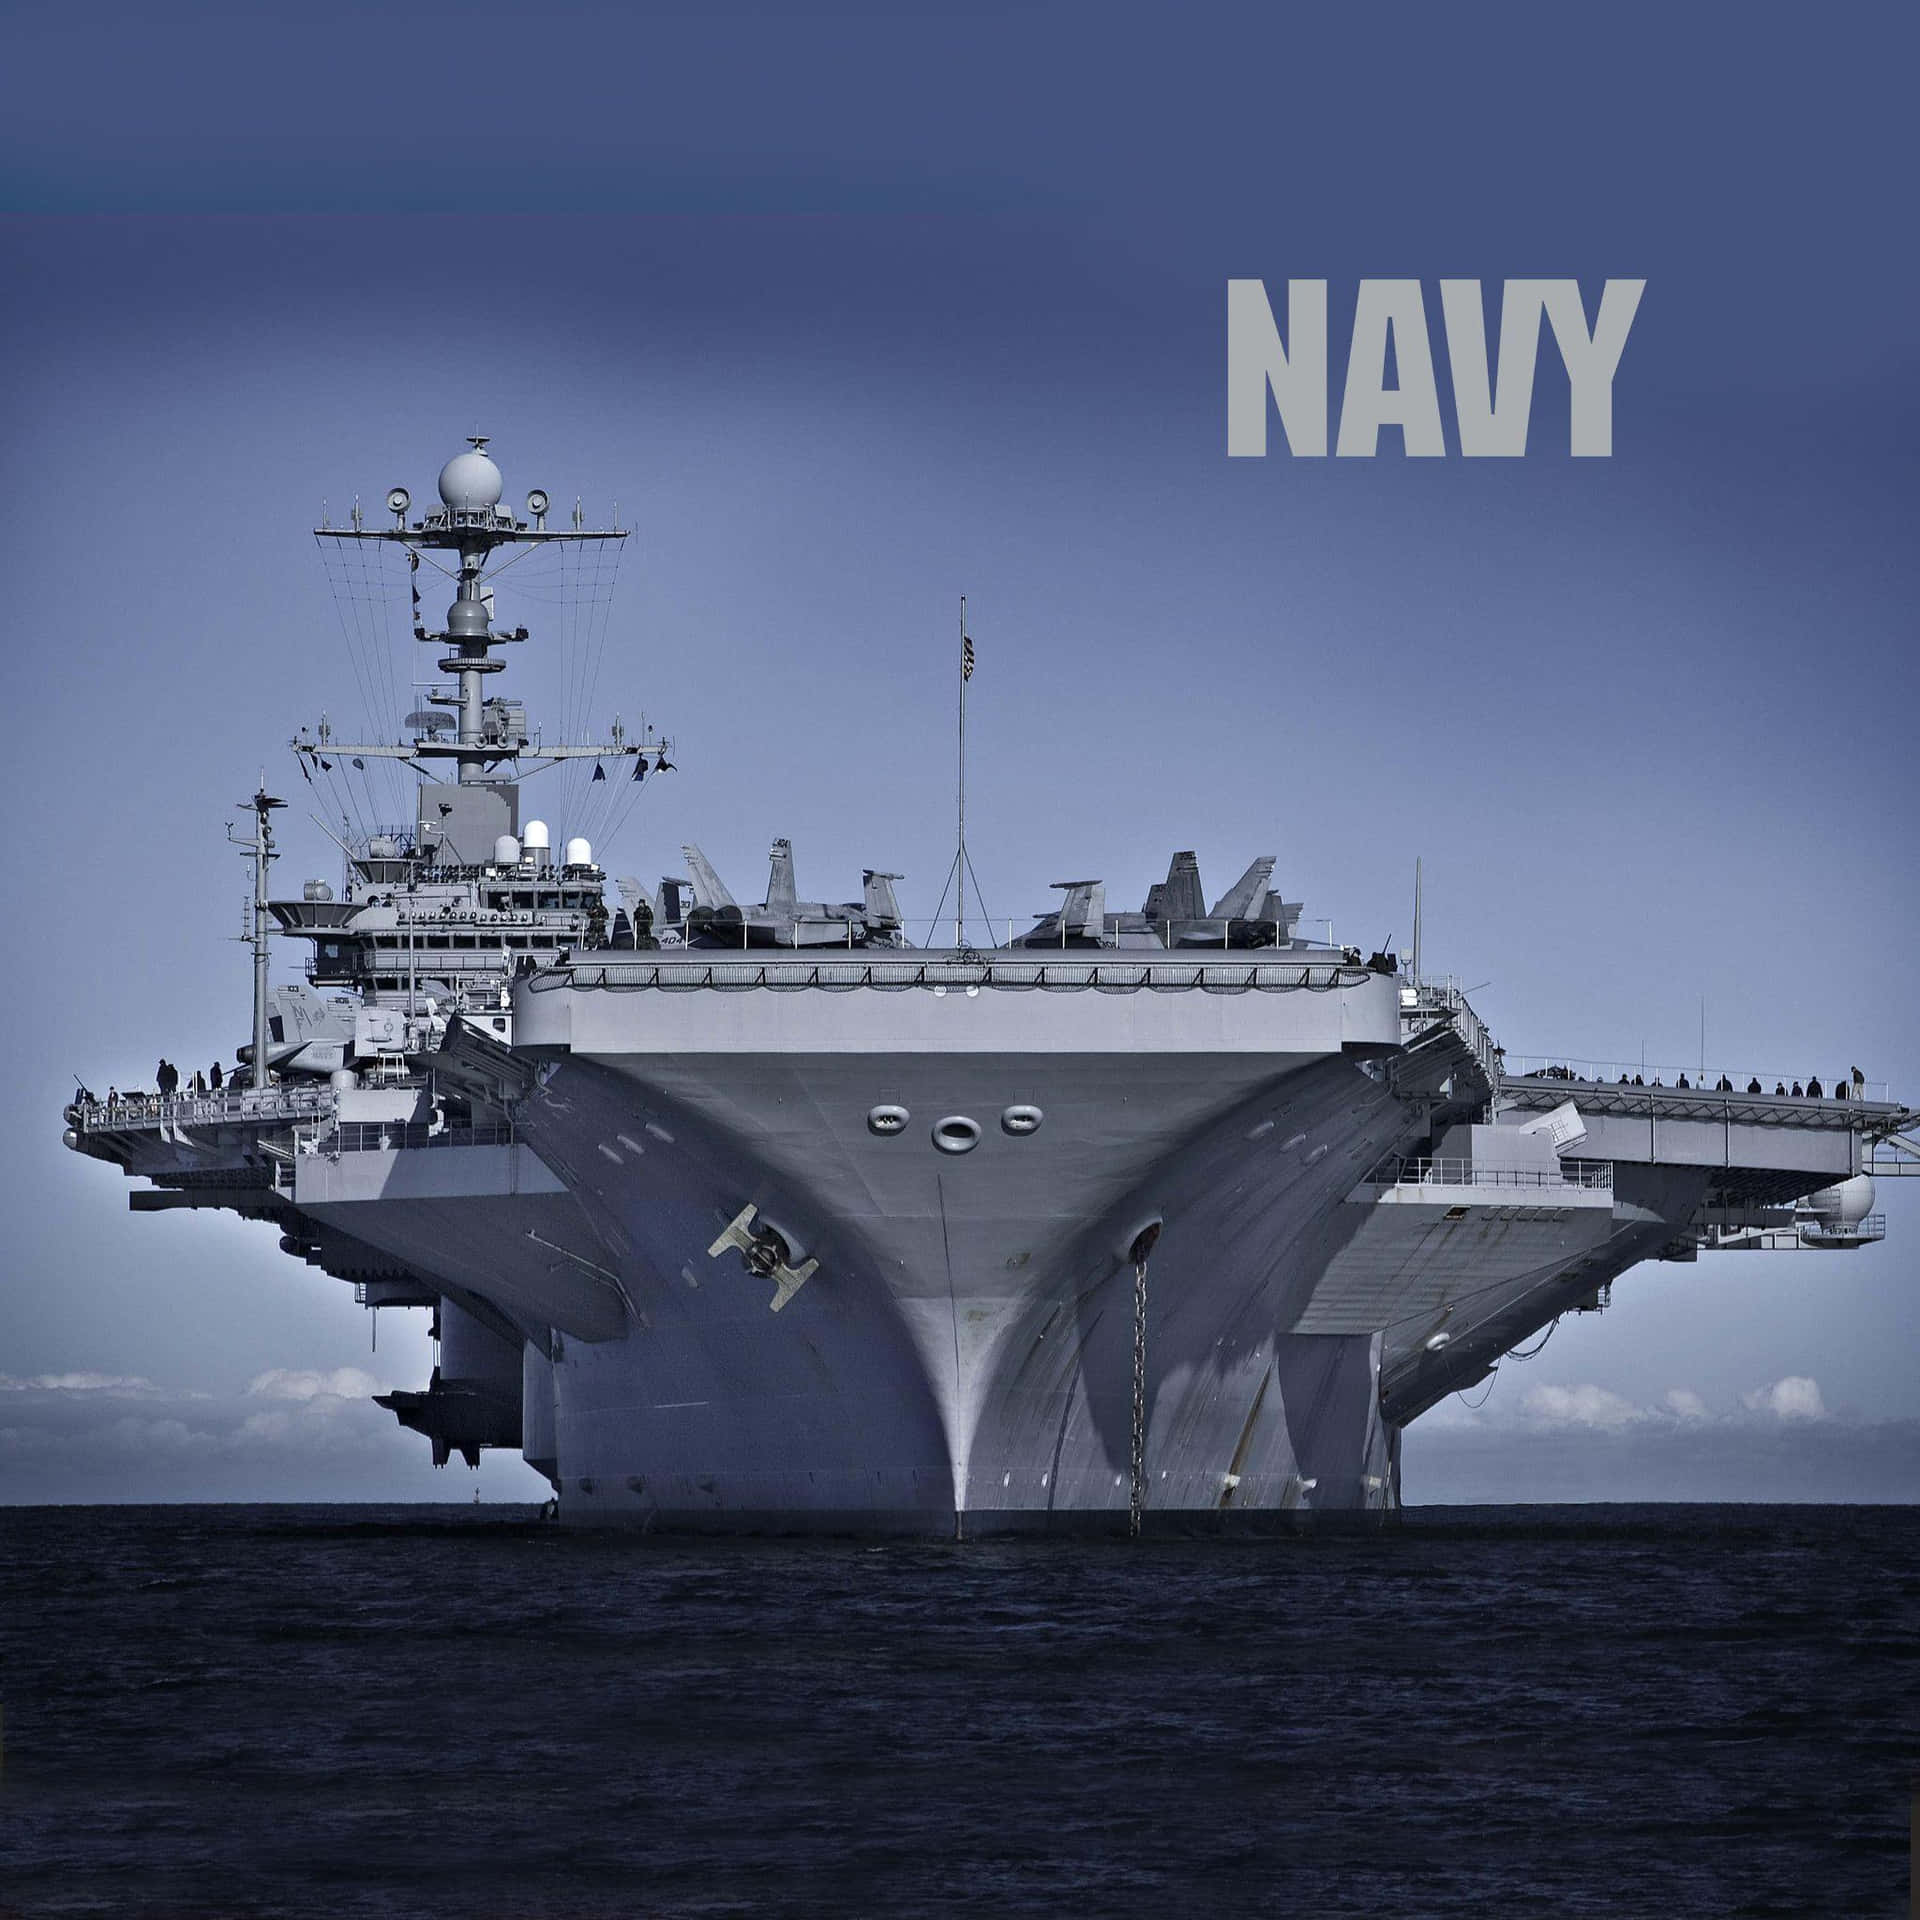 U.S. Navy Warship in Action